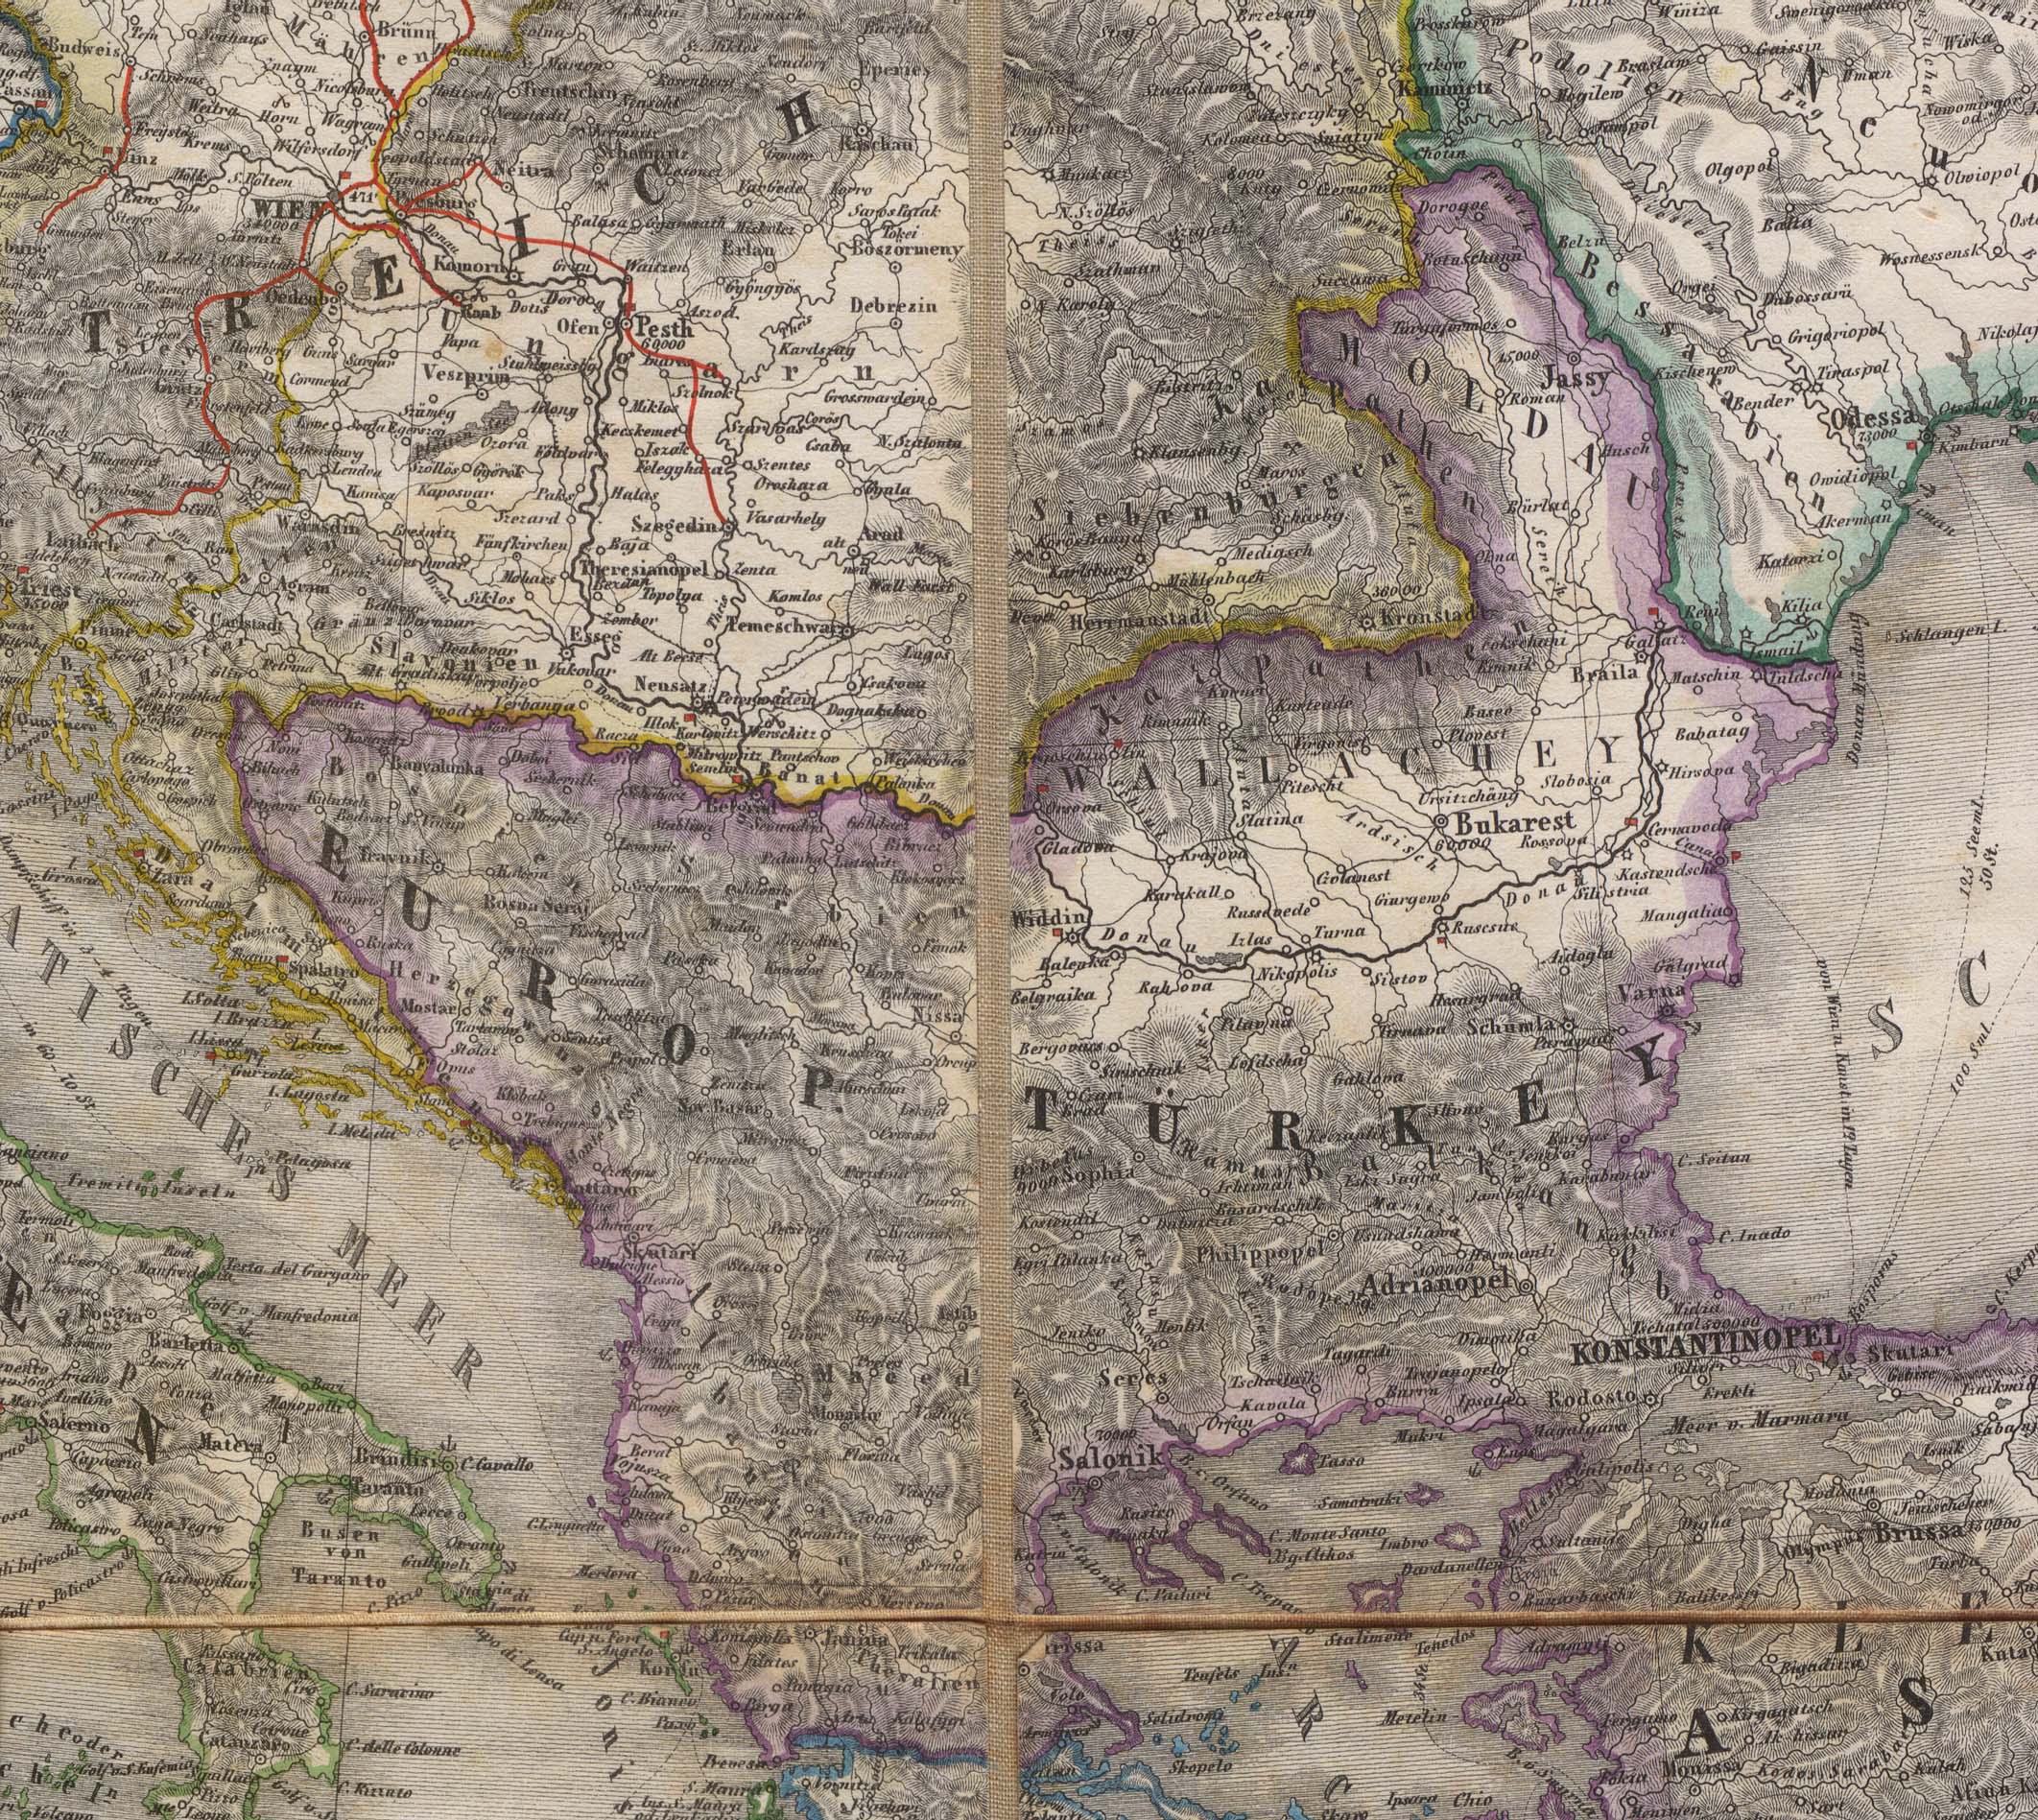 Historical Map of Balkan Balkans 1856 (972K)
Portion of 'Karte von Europa mit Nord-Afrika' Georg Mayr, 1856.
